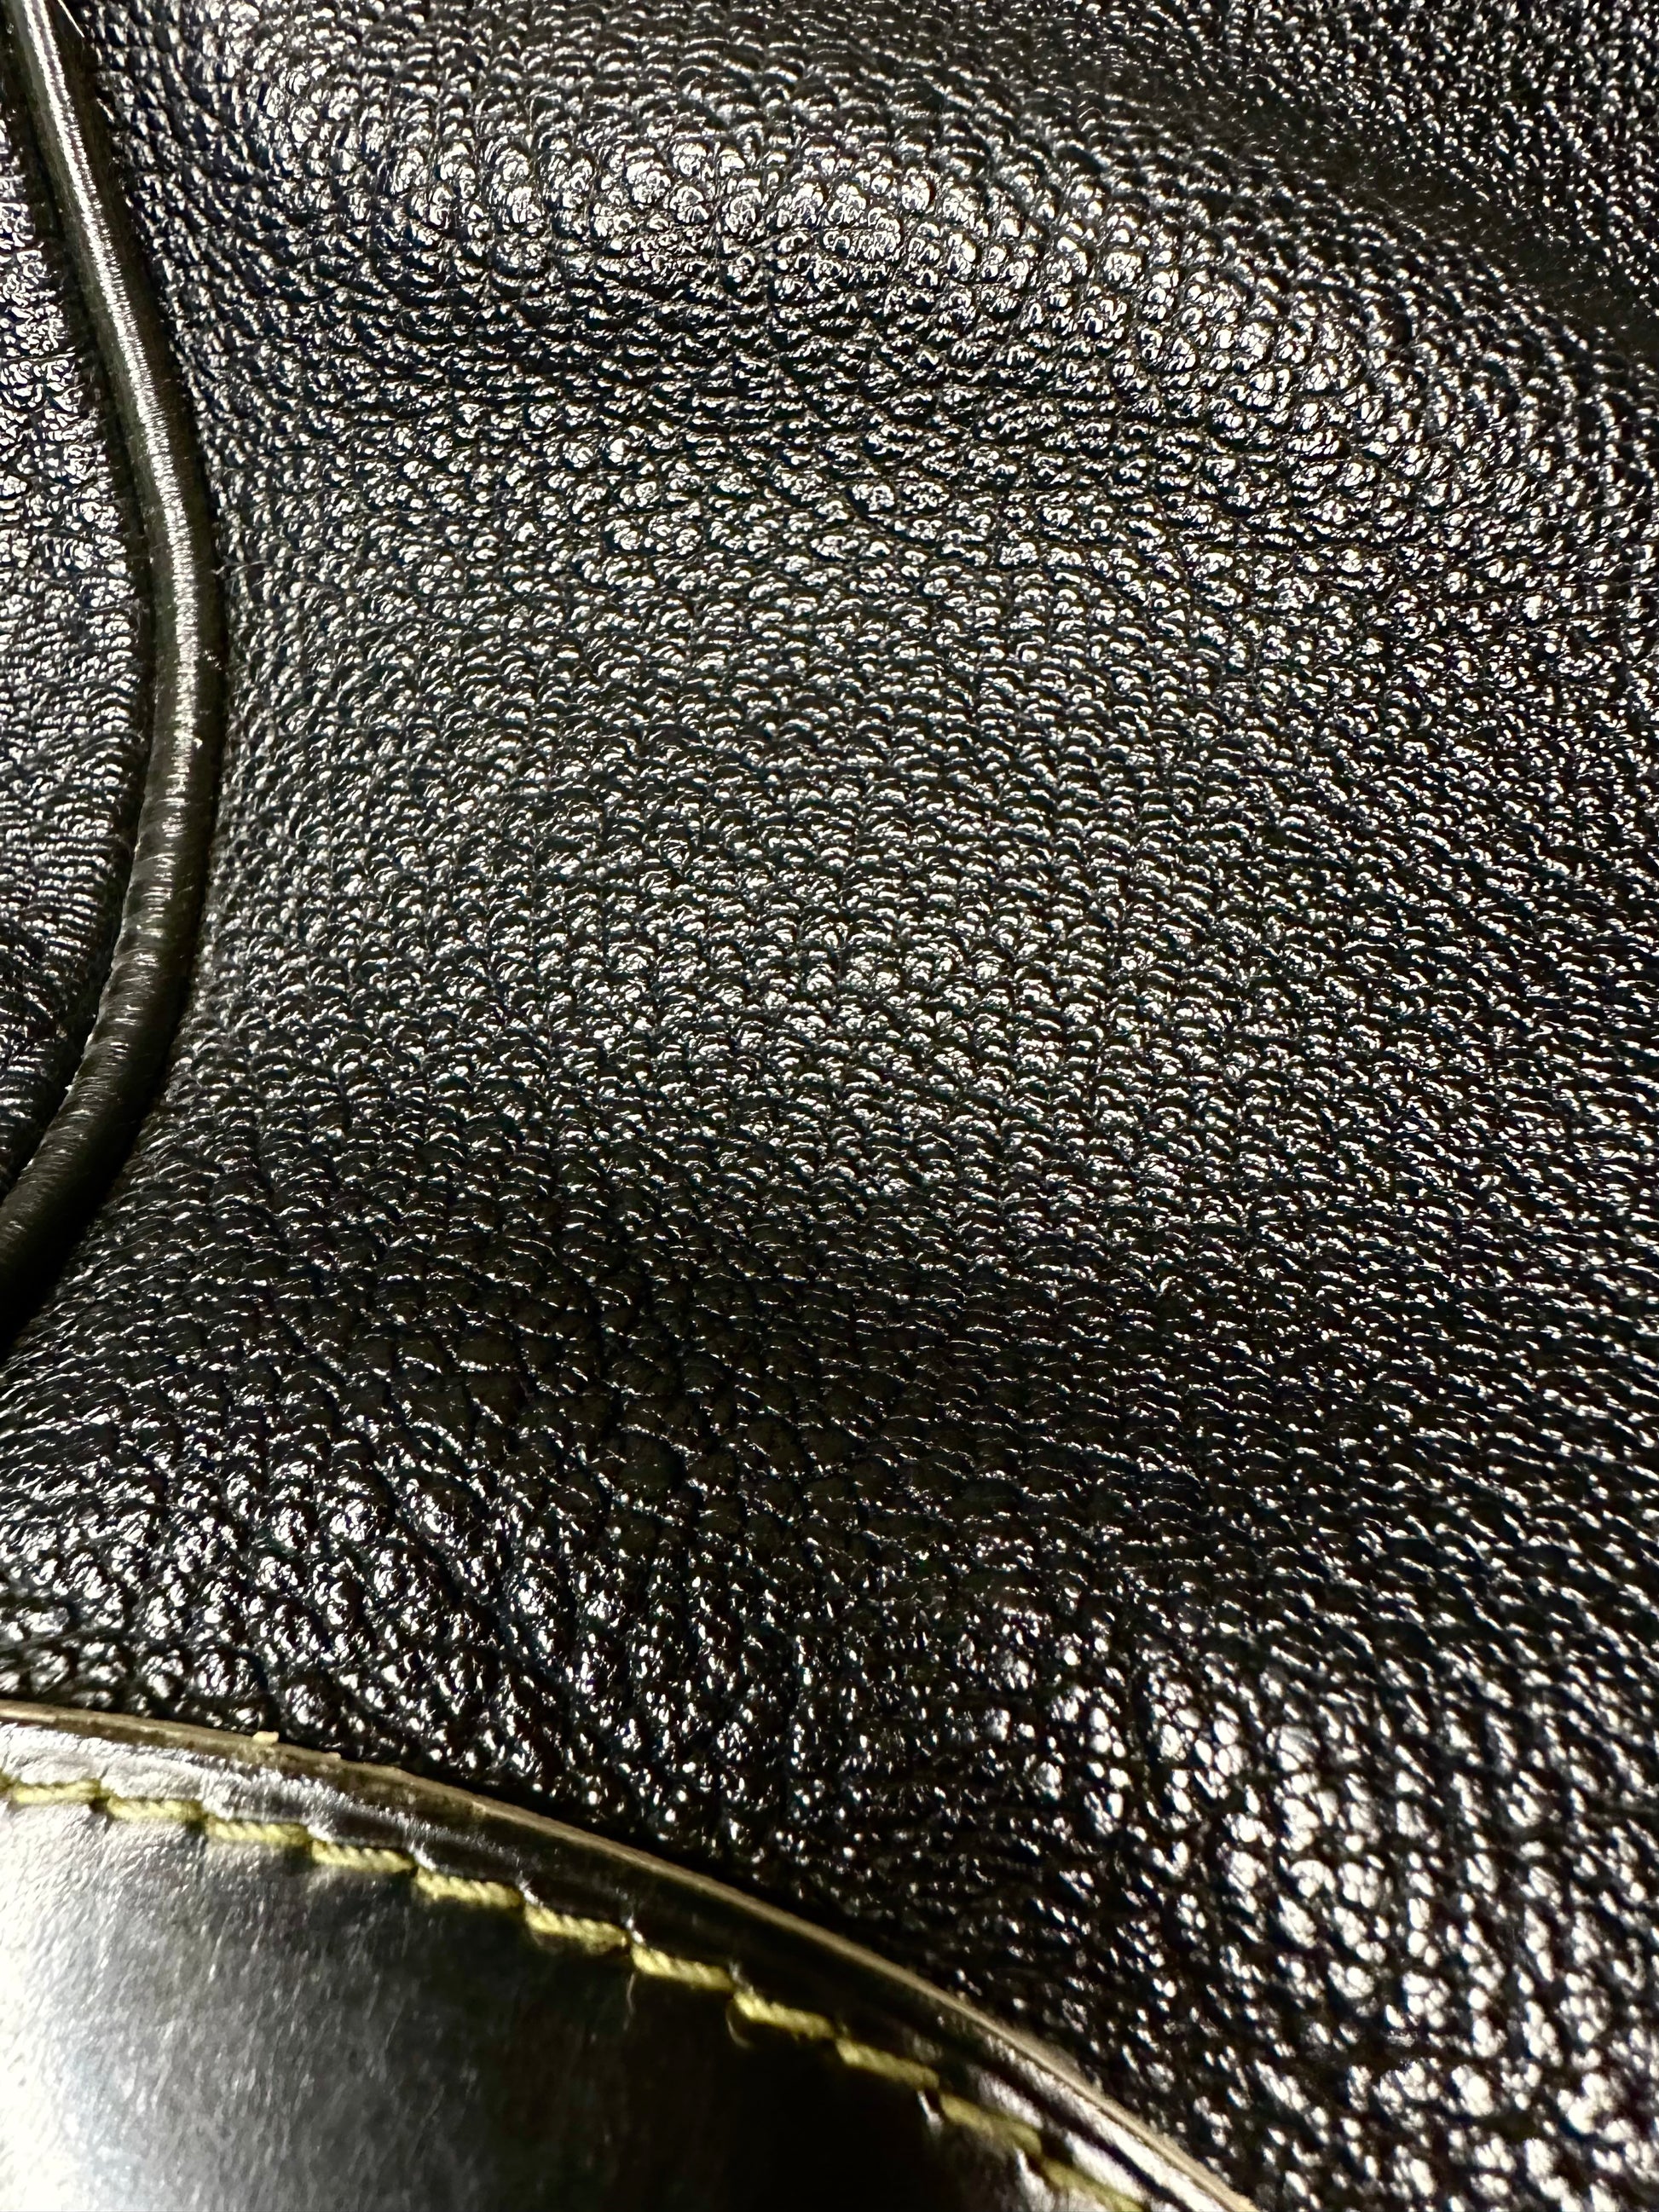 Louis Vuitton // Handbag / Gold Hardware / Restored / Yellow